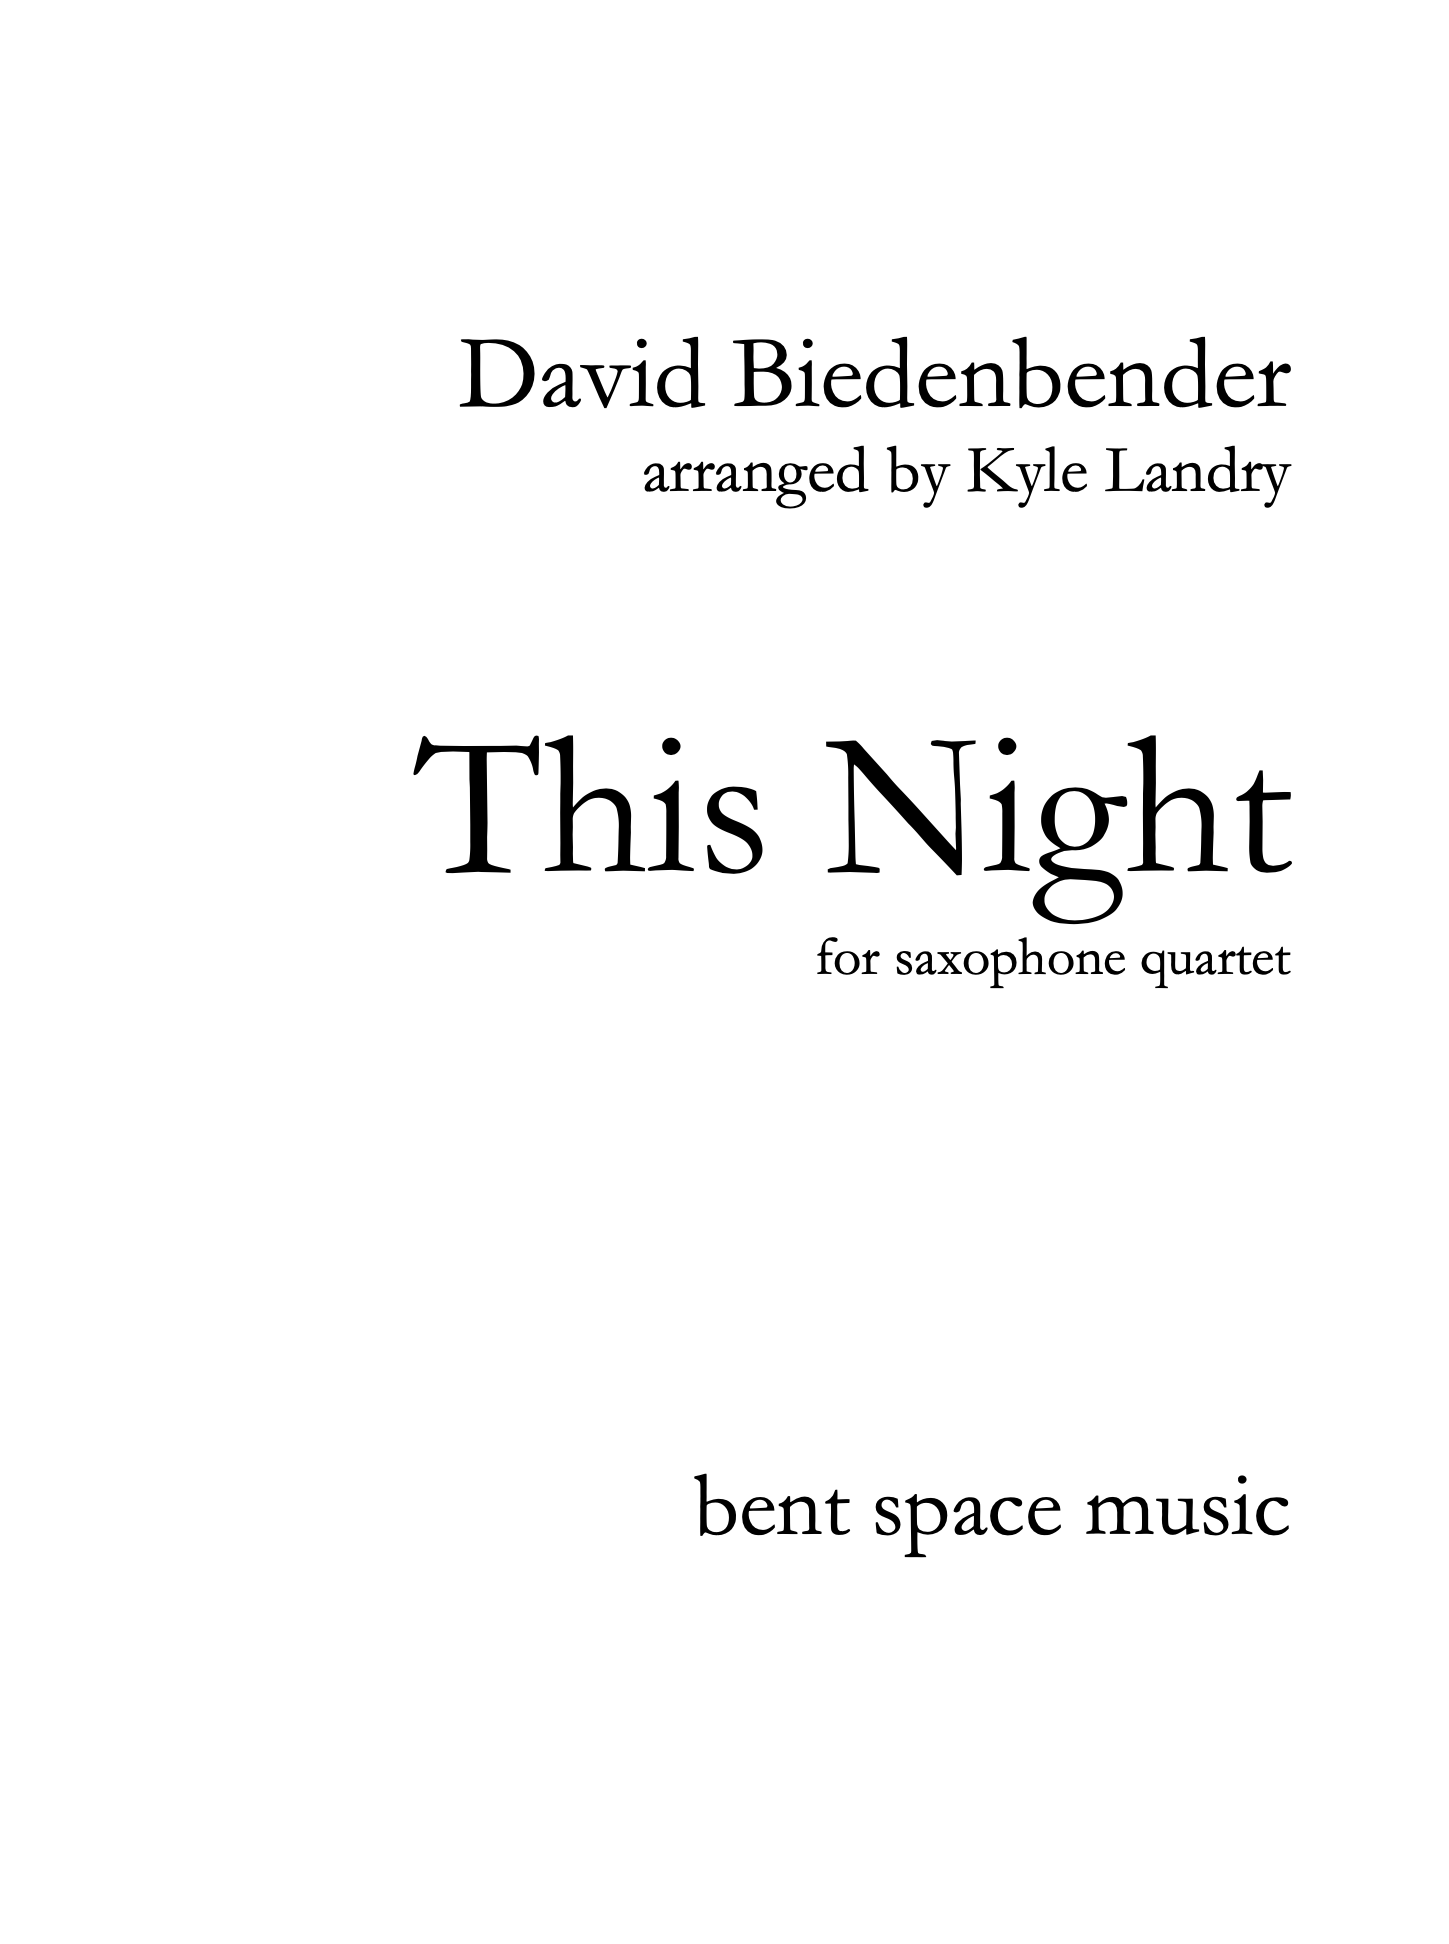 This Night (Quartet Version) by David Biedenbender, arr. Kyle Landry